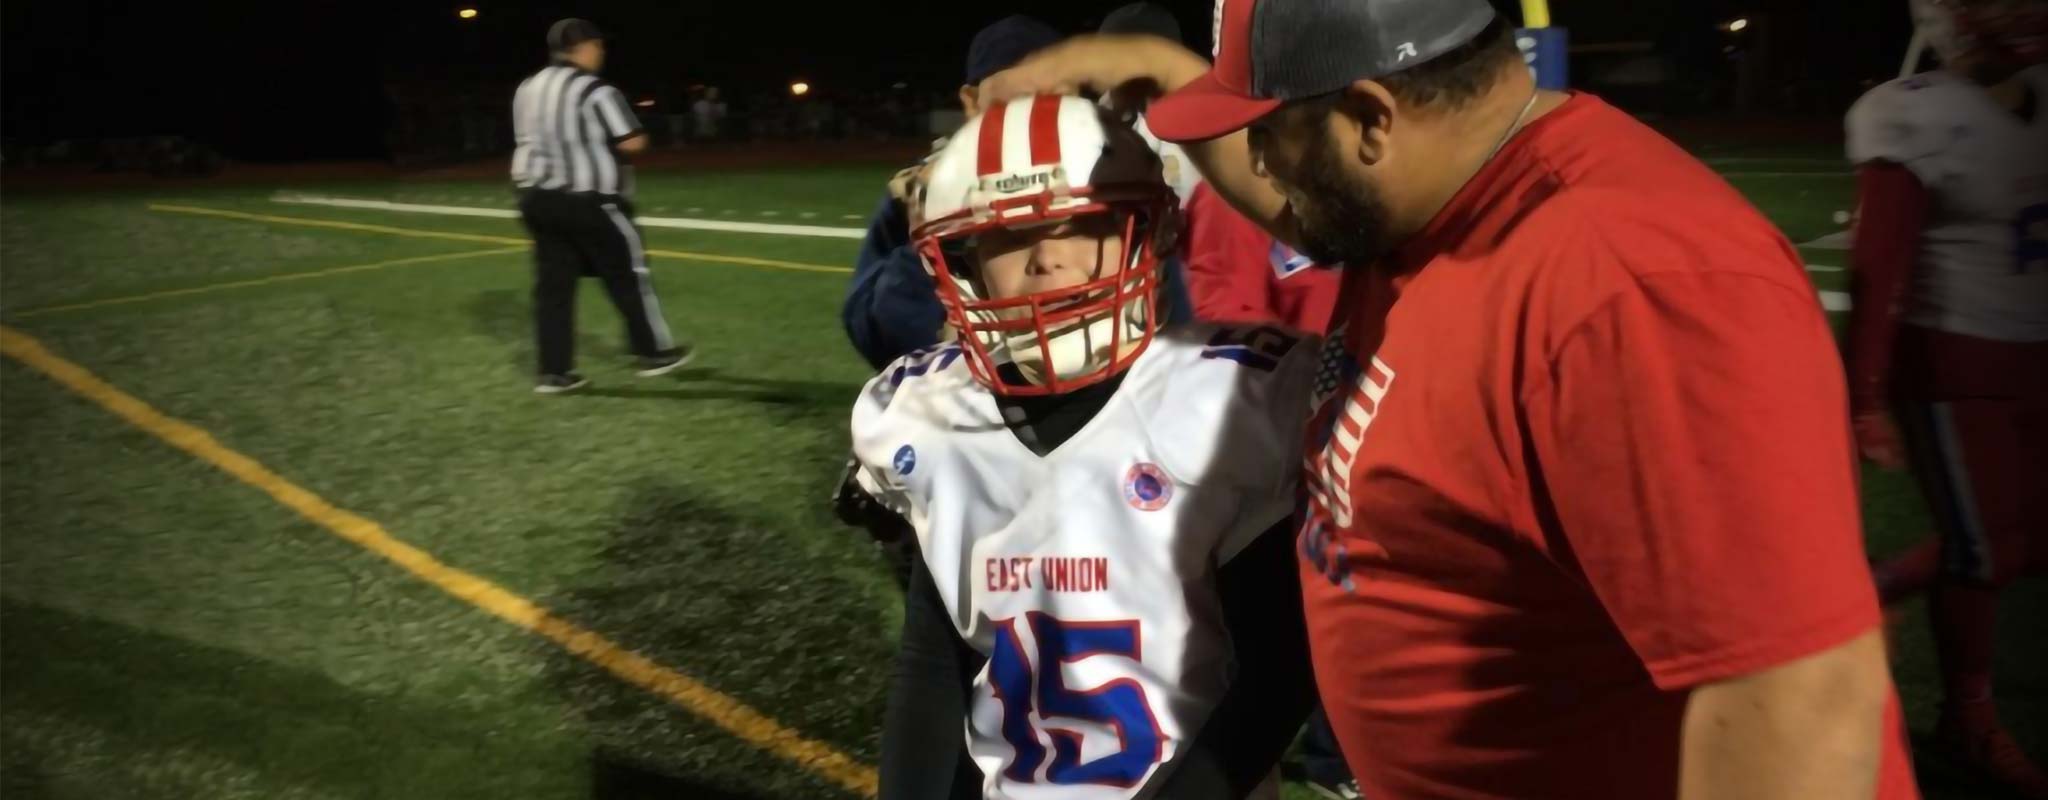 The East Union high school football coach pats a player on their head.